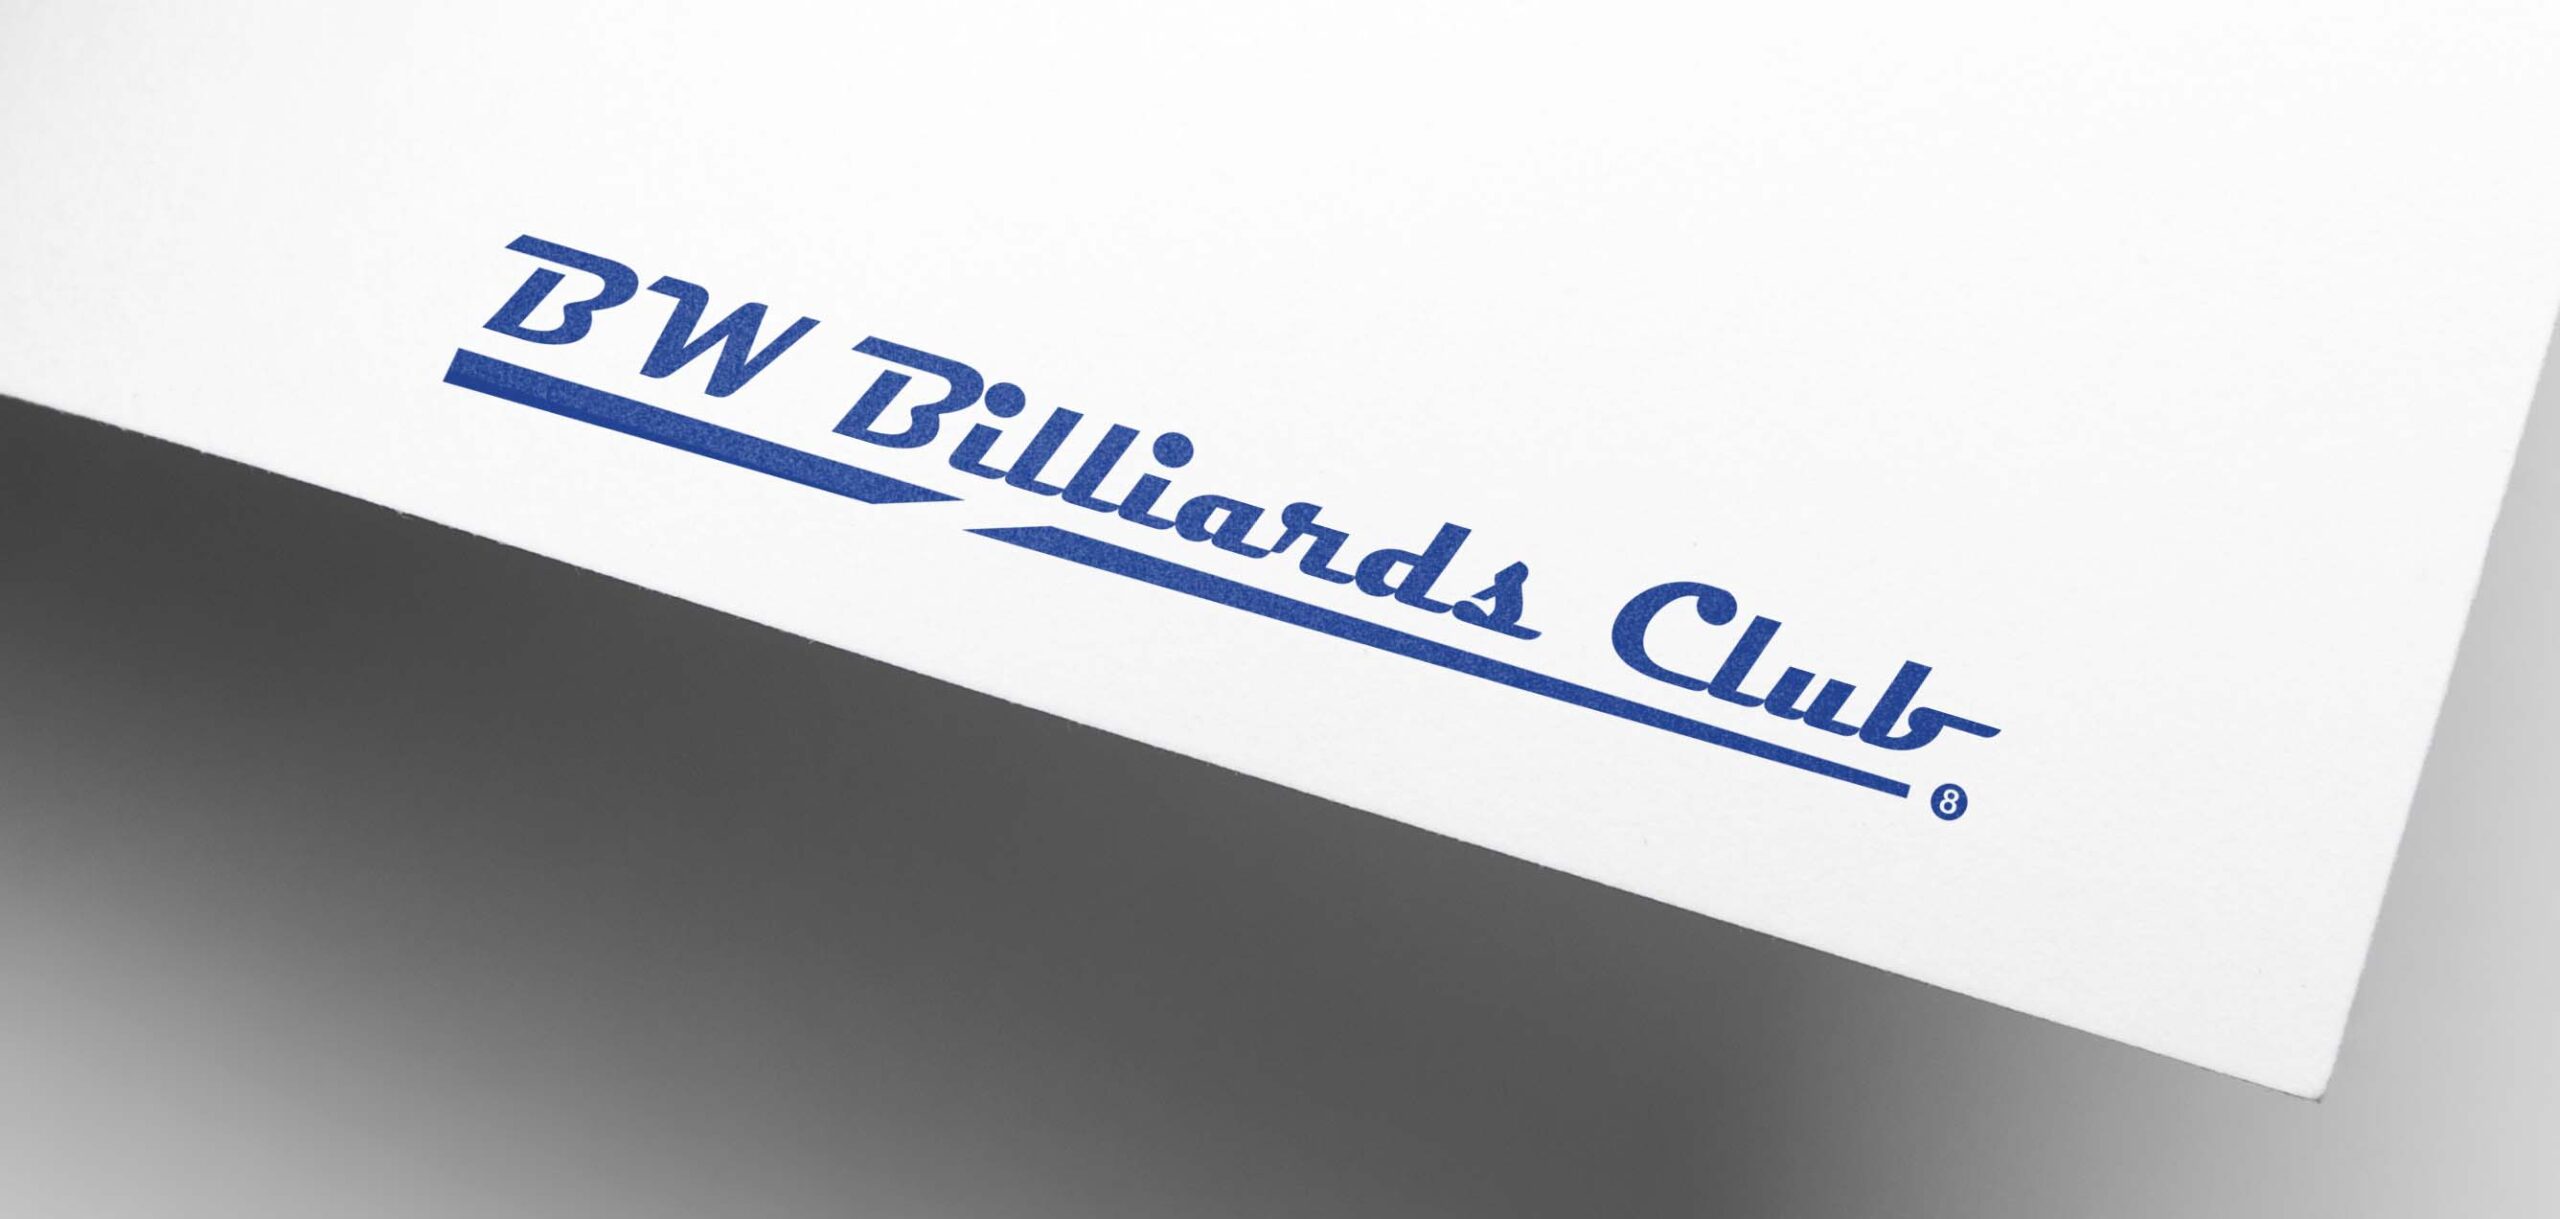 BW Billiards Club Logo Mock Up